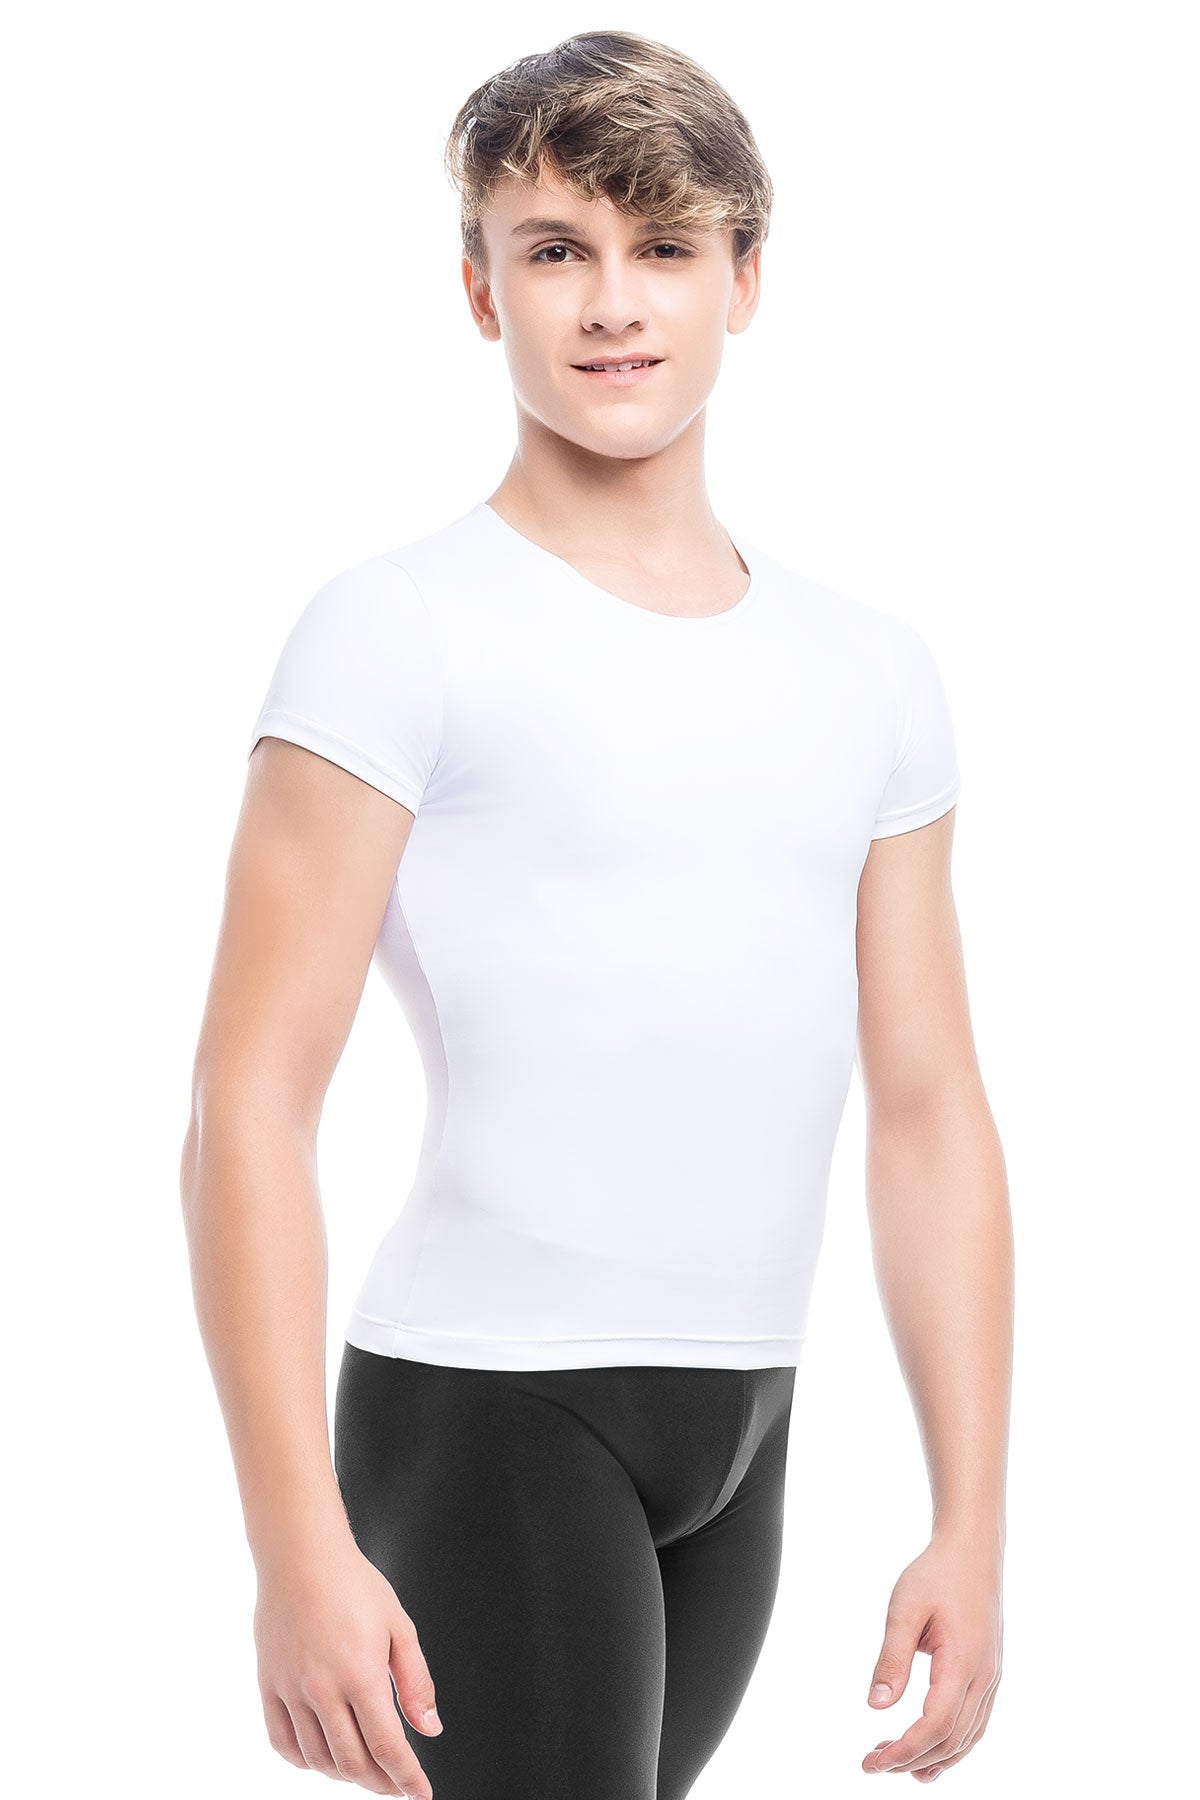 Franco - Adult Men's Short Sleeve  Top - SL111